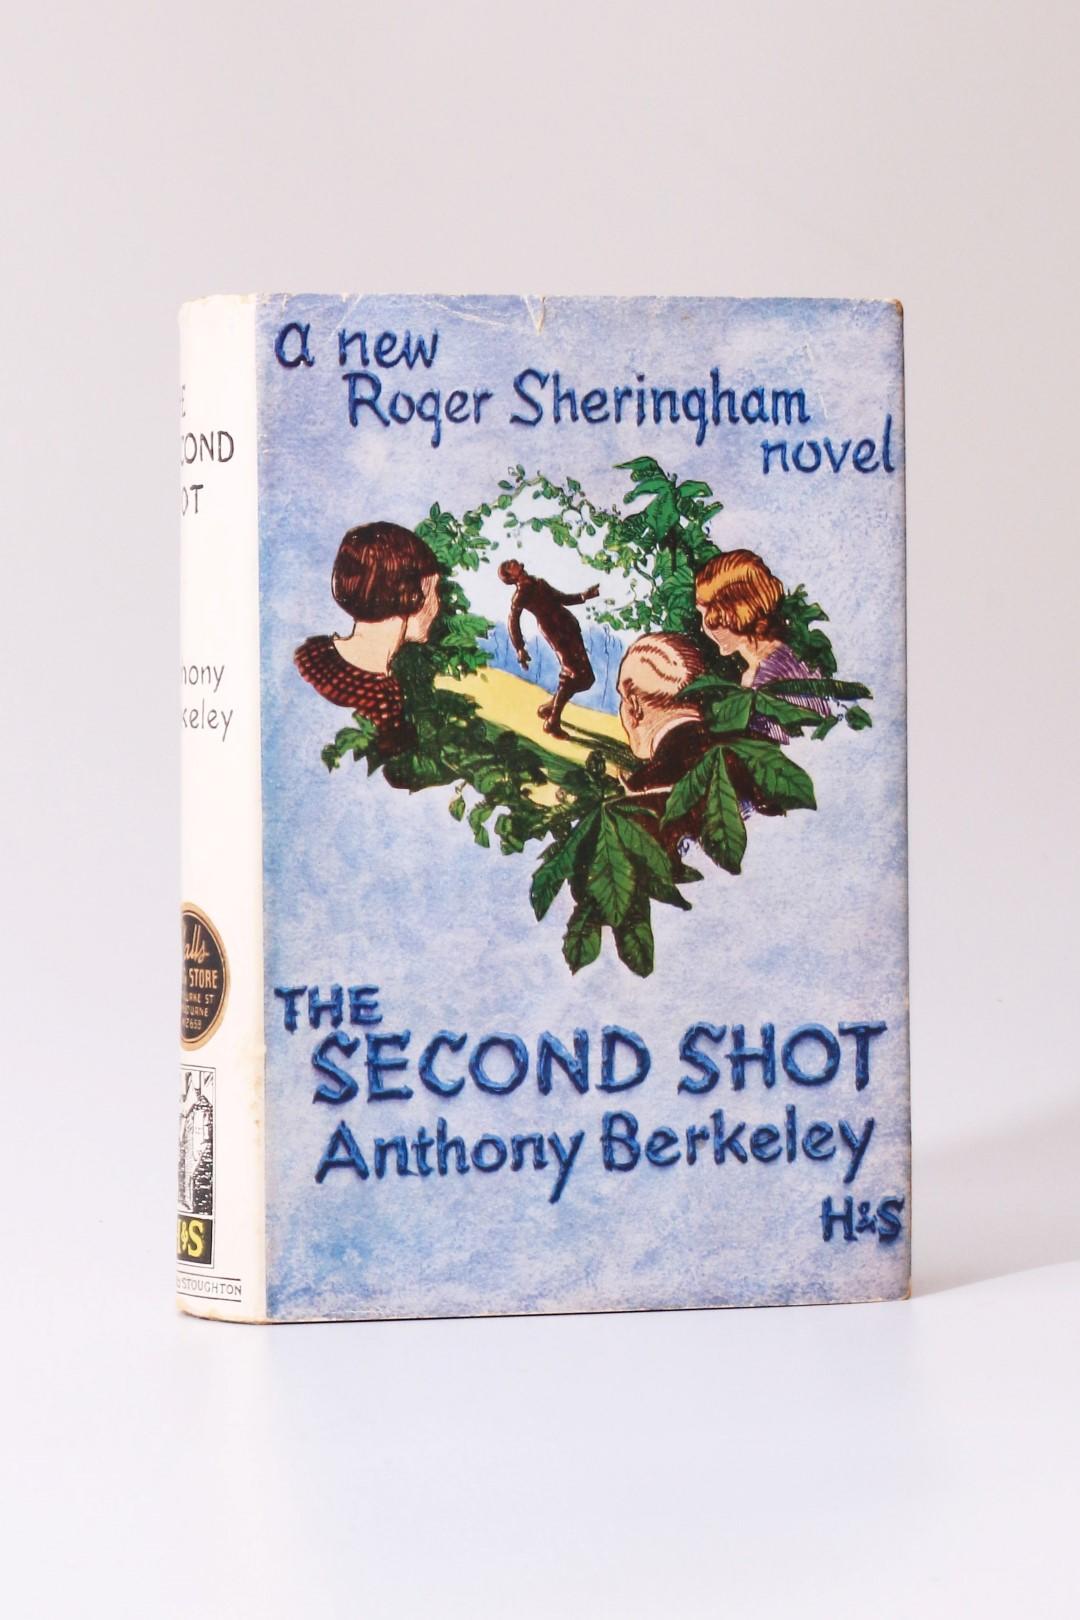 Anthony Berkeley - The Second Short: A new Roger Sheringham Novel - Hodder & Stoughton, n.d. [1930], First Edition.